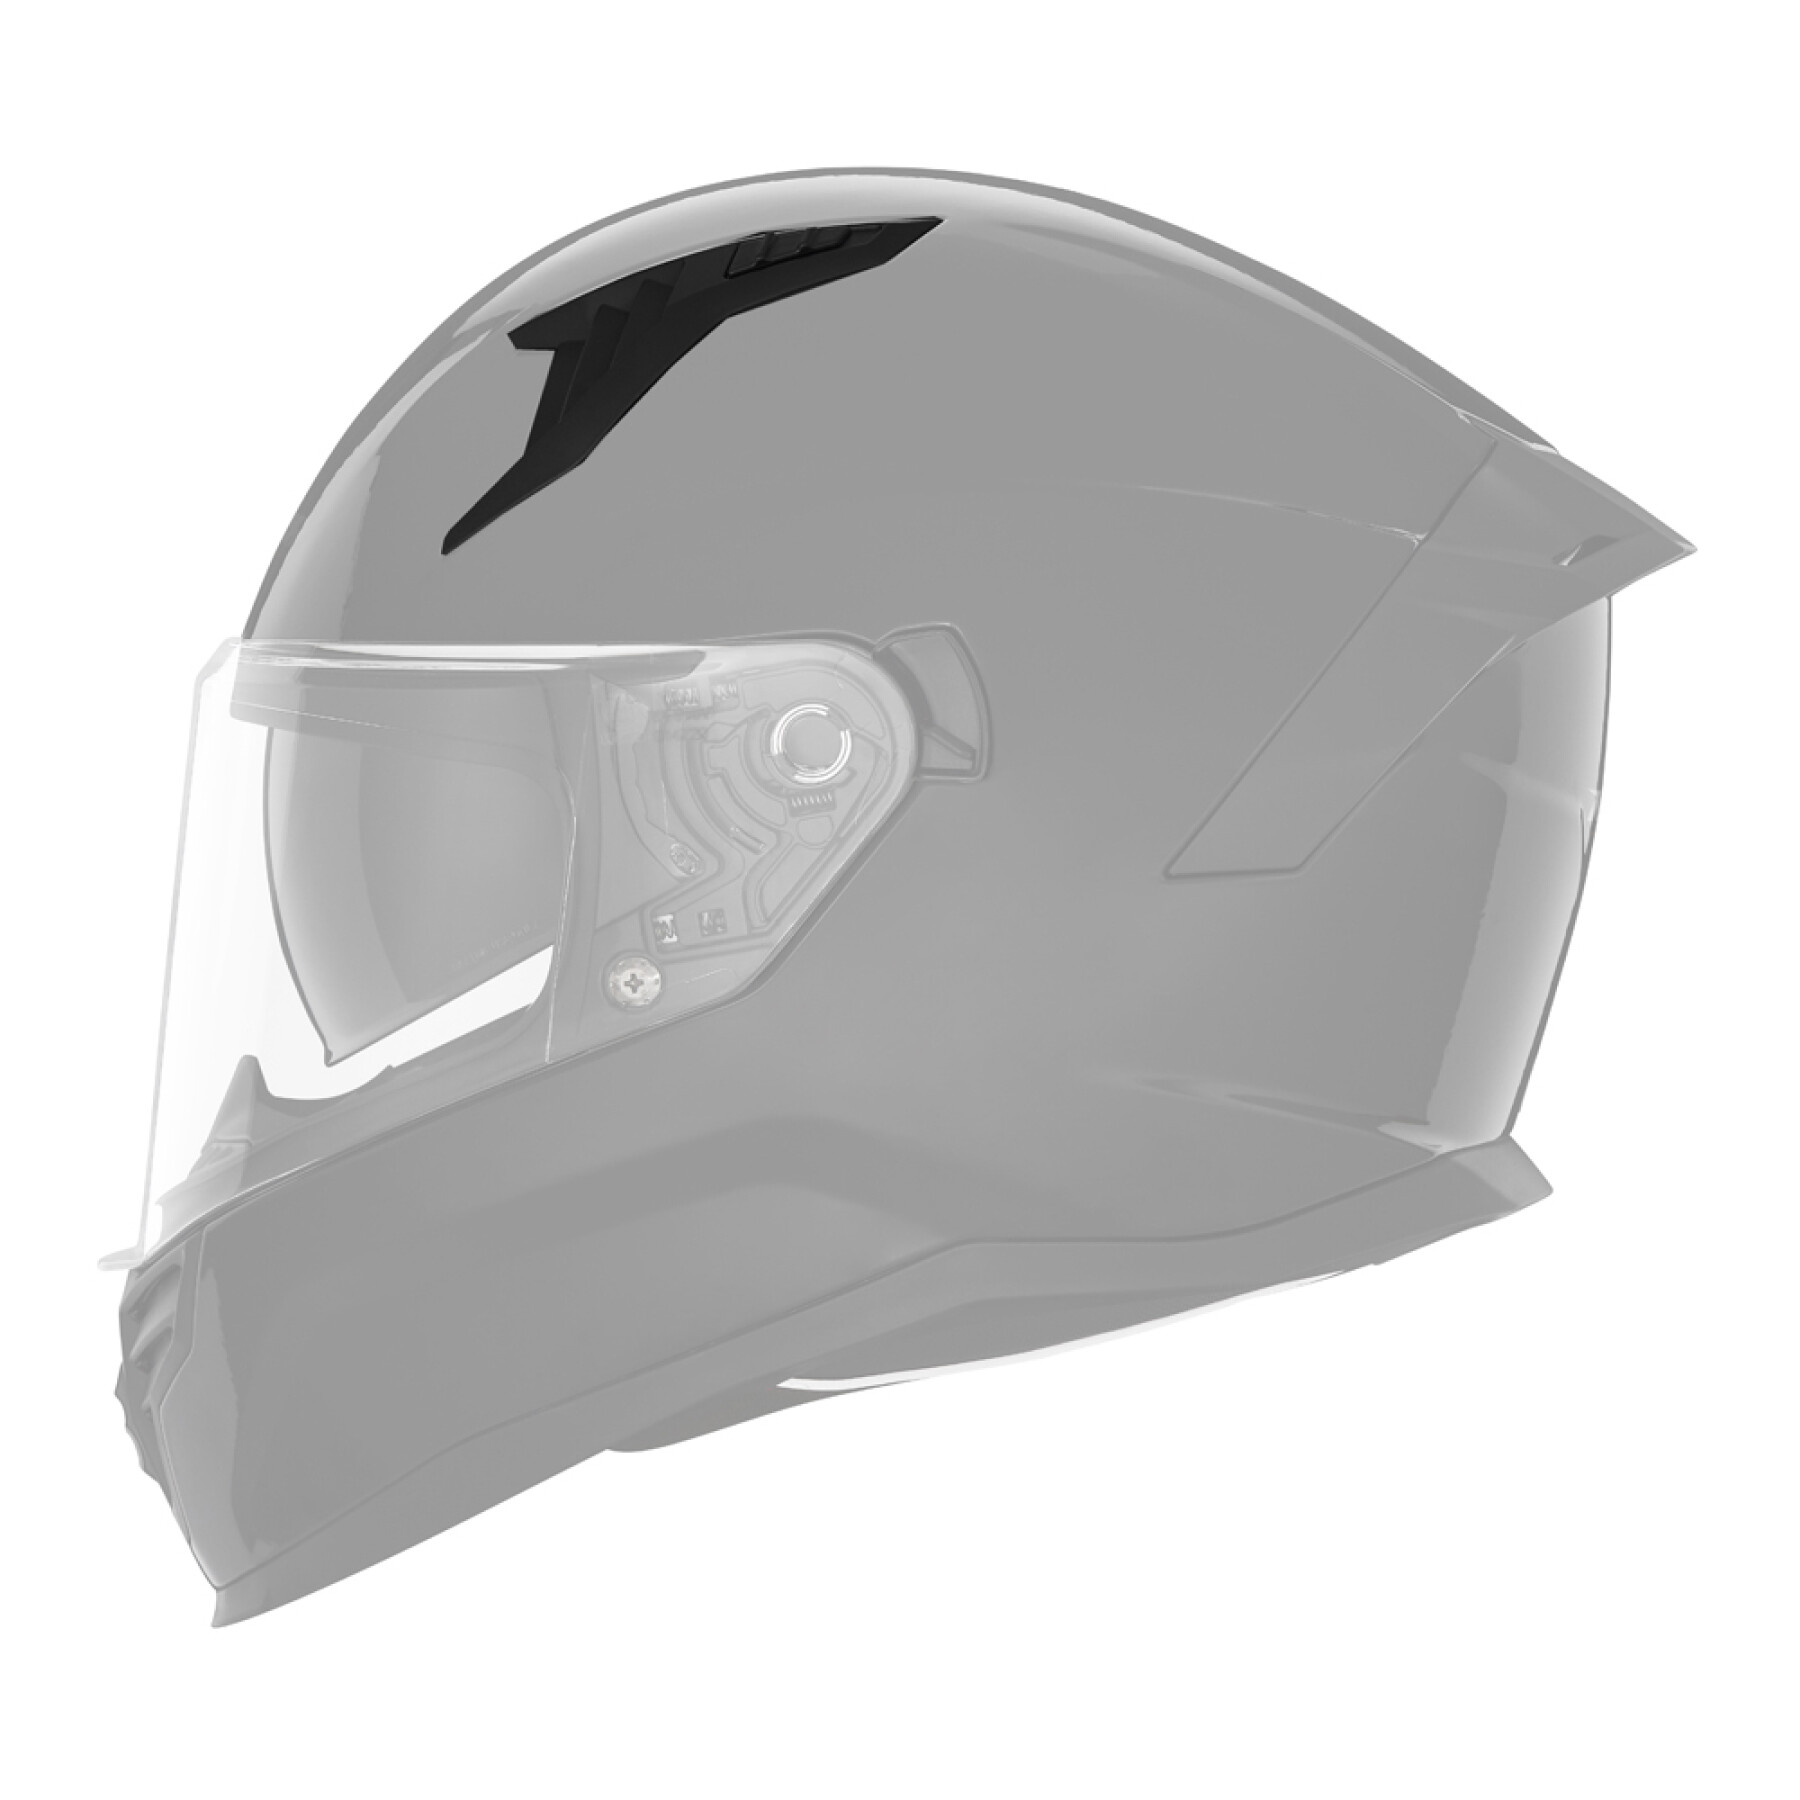 Ventilazione casco moto superiore Nox N 401